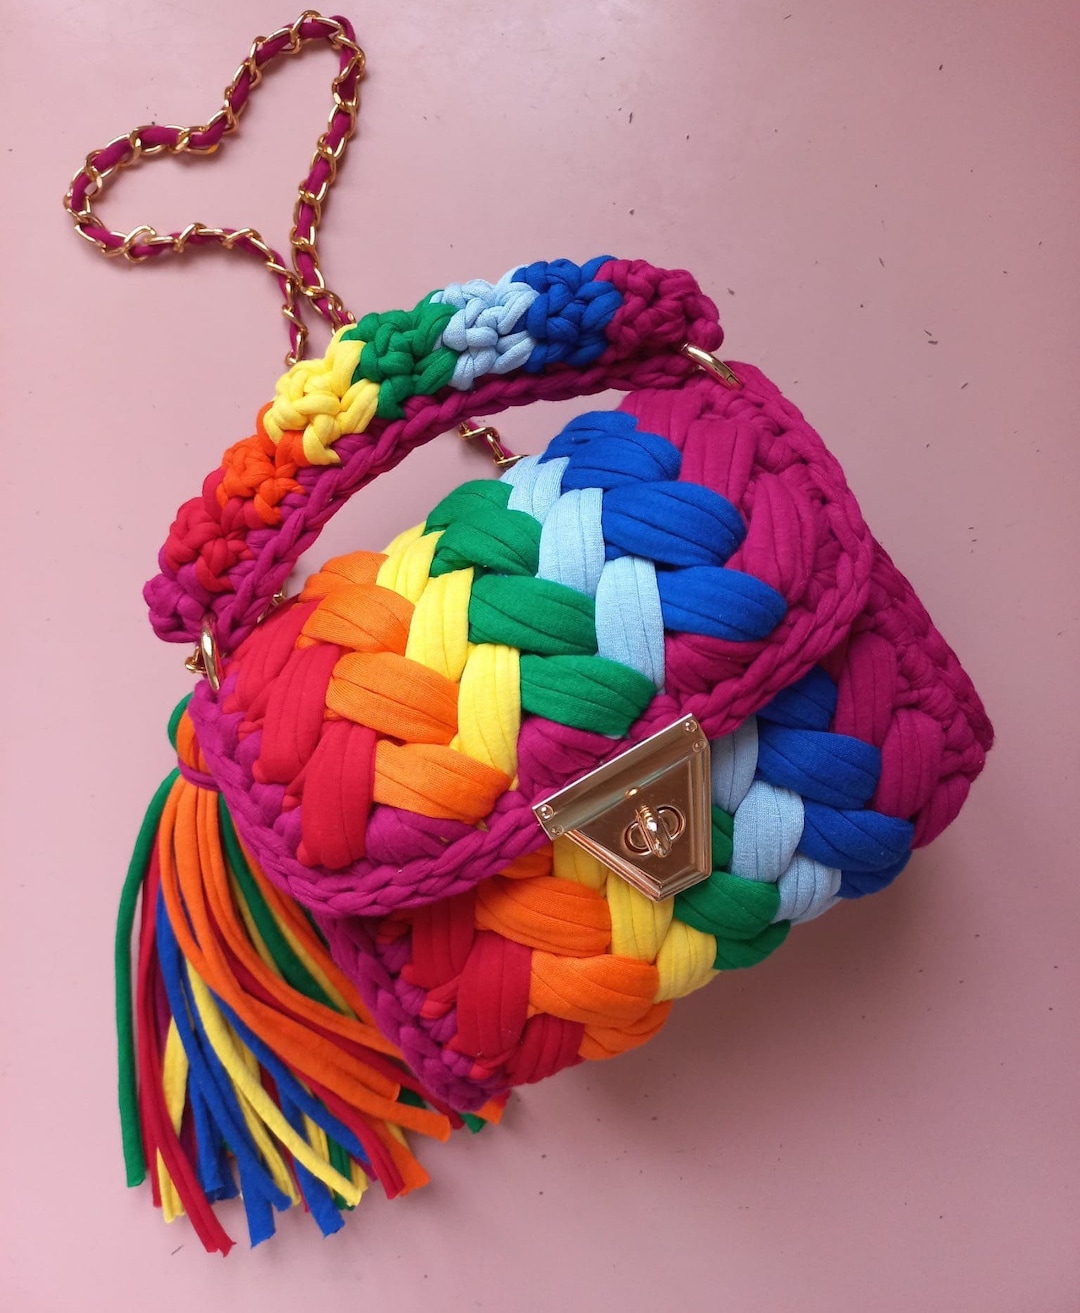 crochet mobile cover, woolen phone pouch, crosia ke design, #55,by |All in  one sandhya | - YouTube